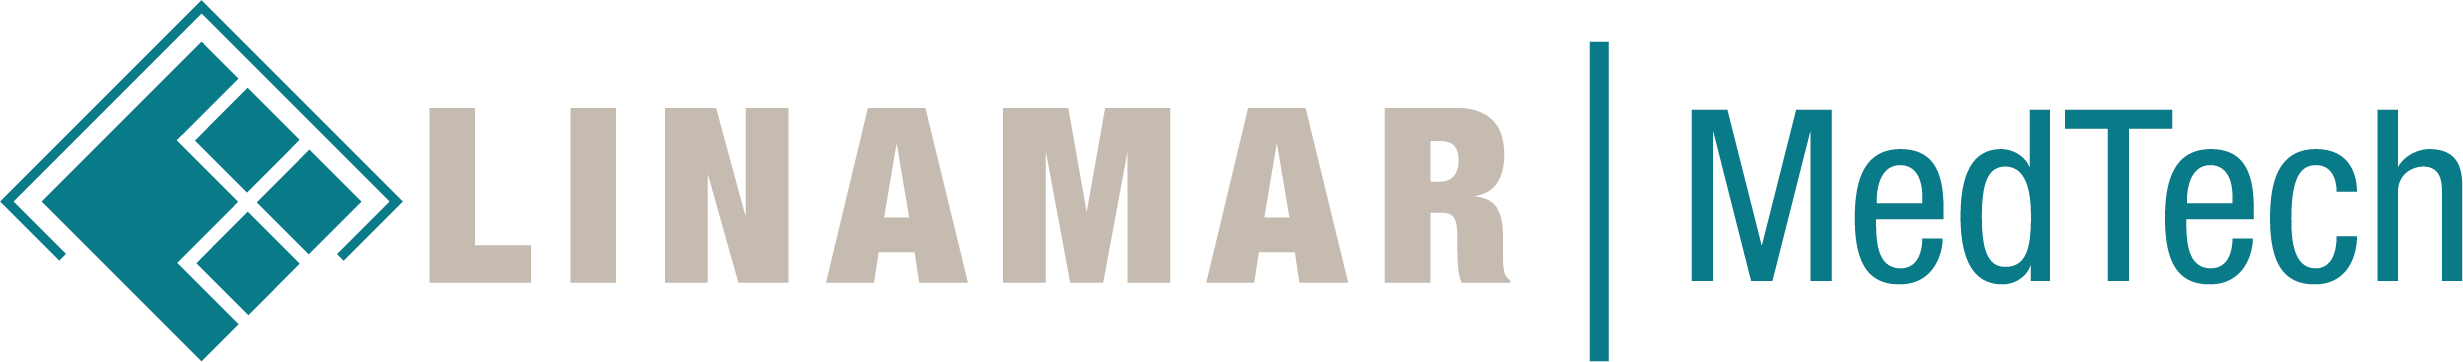 Linamar_MedTech_Full_Colour Logo